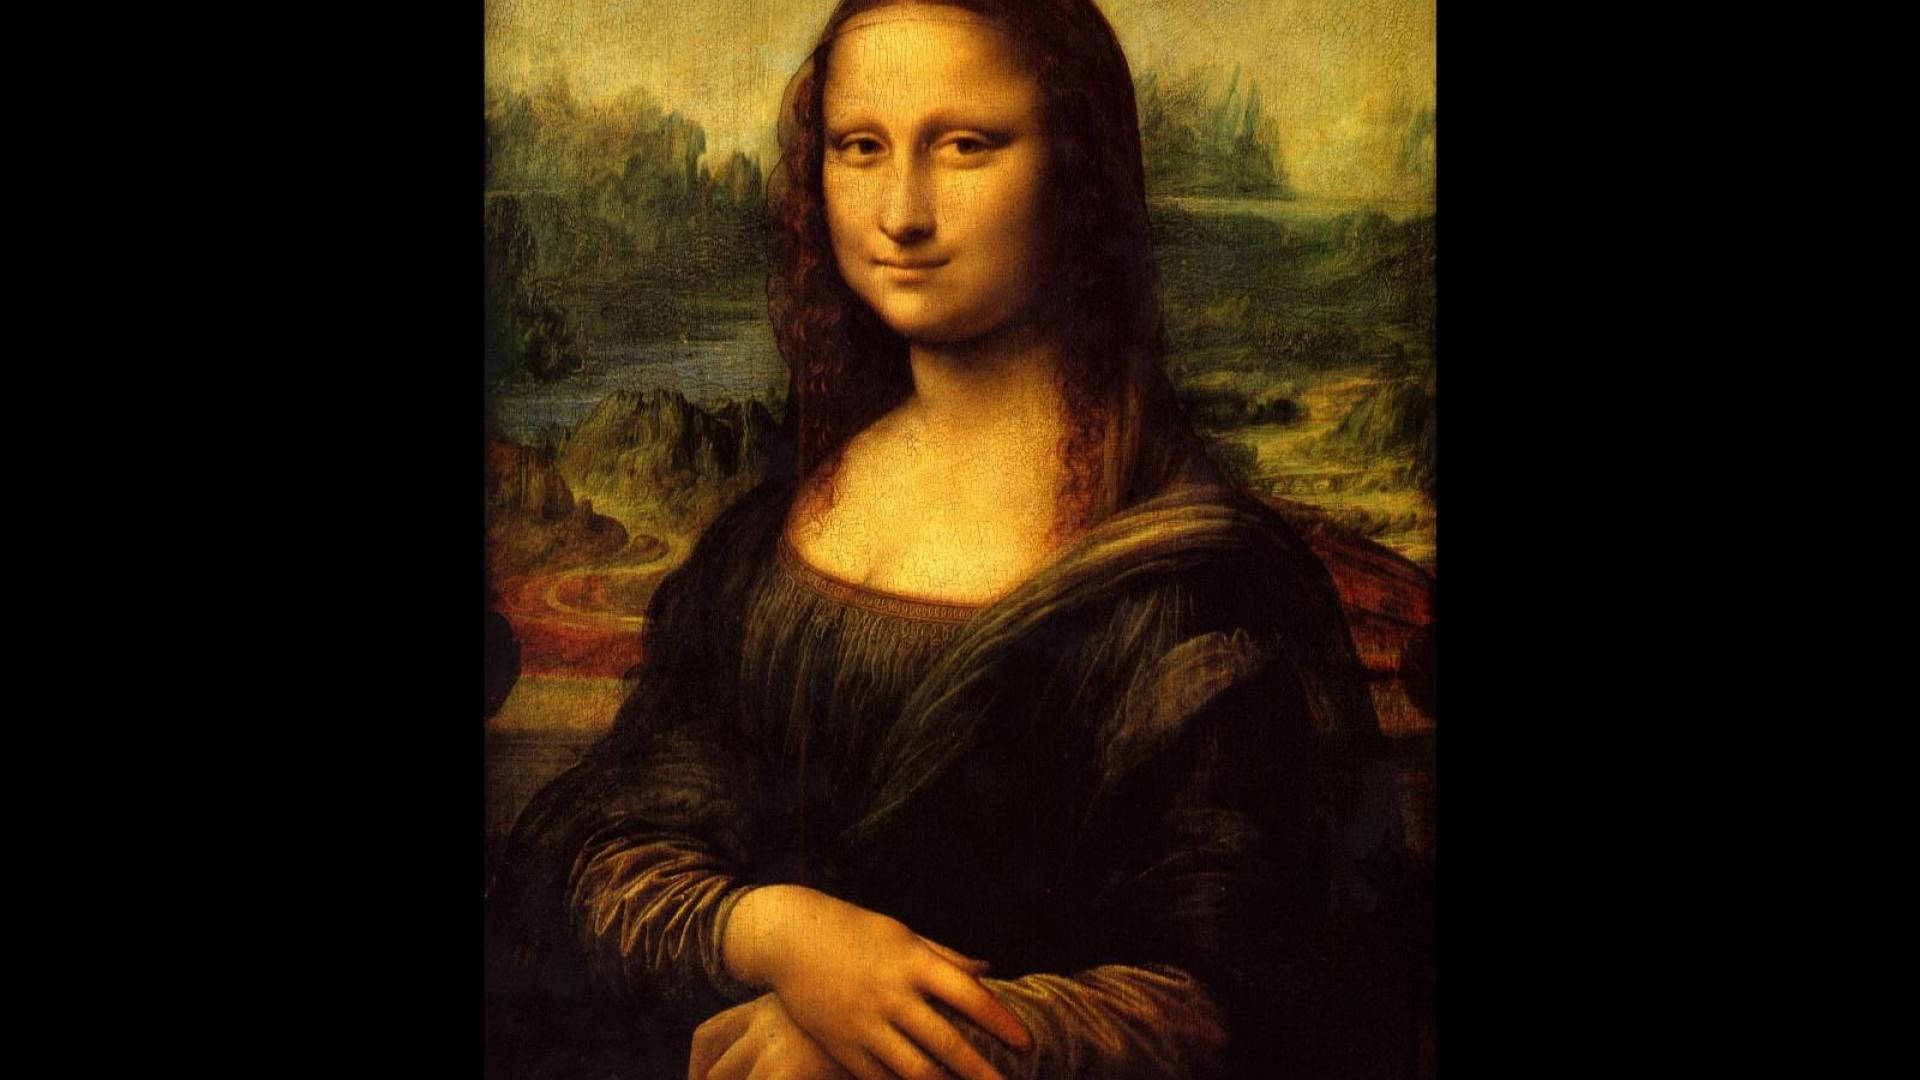 Caption: The Enigmatic Smile - Mona Lisa By Da Vinci